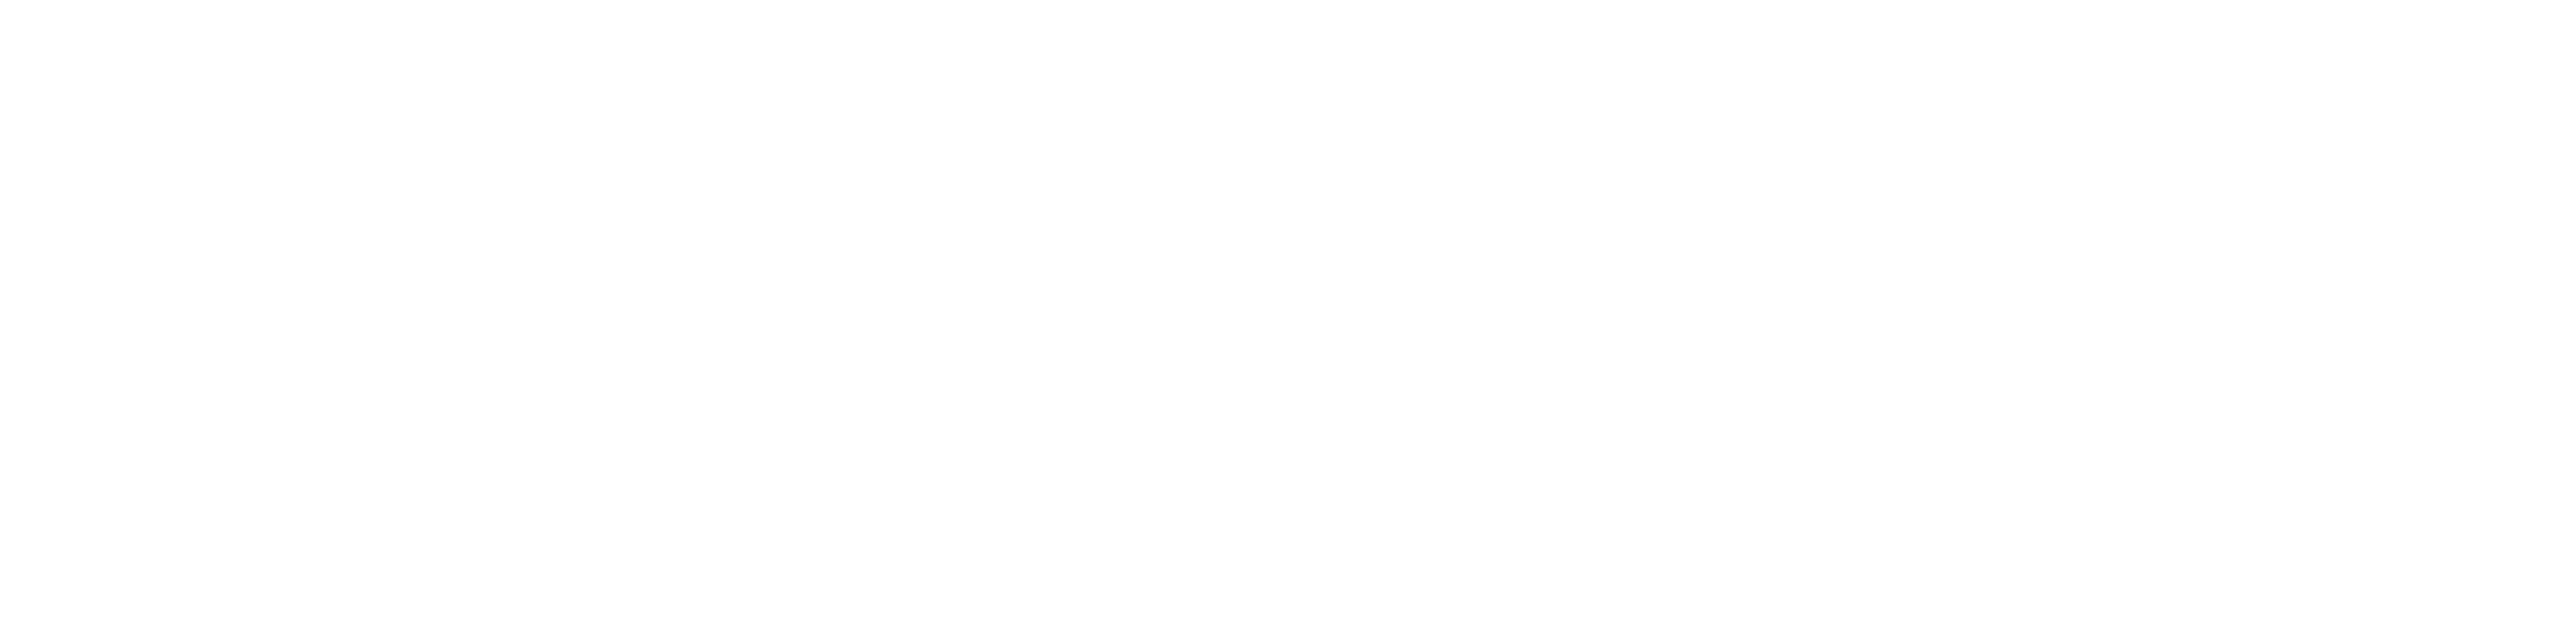 Liberale Hochschulgruppe (LHG) Fulda